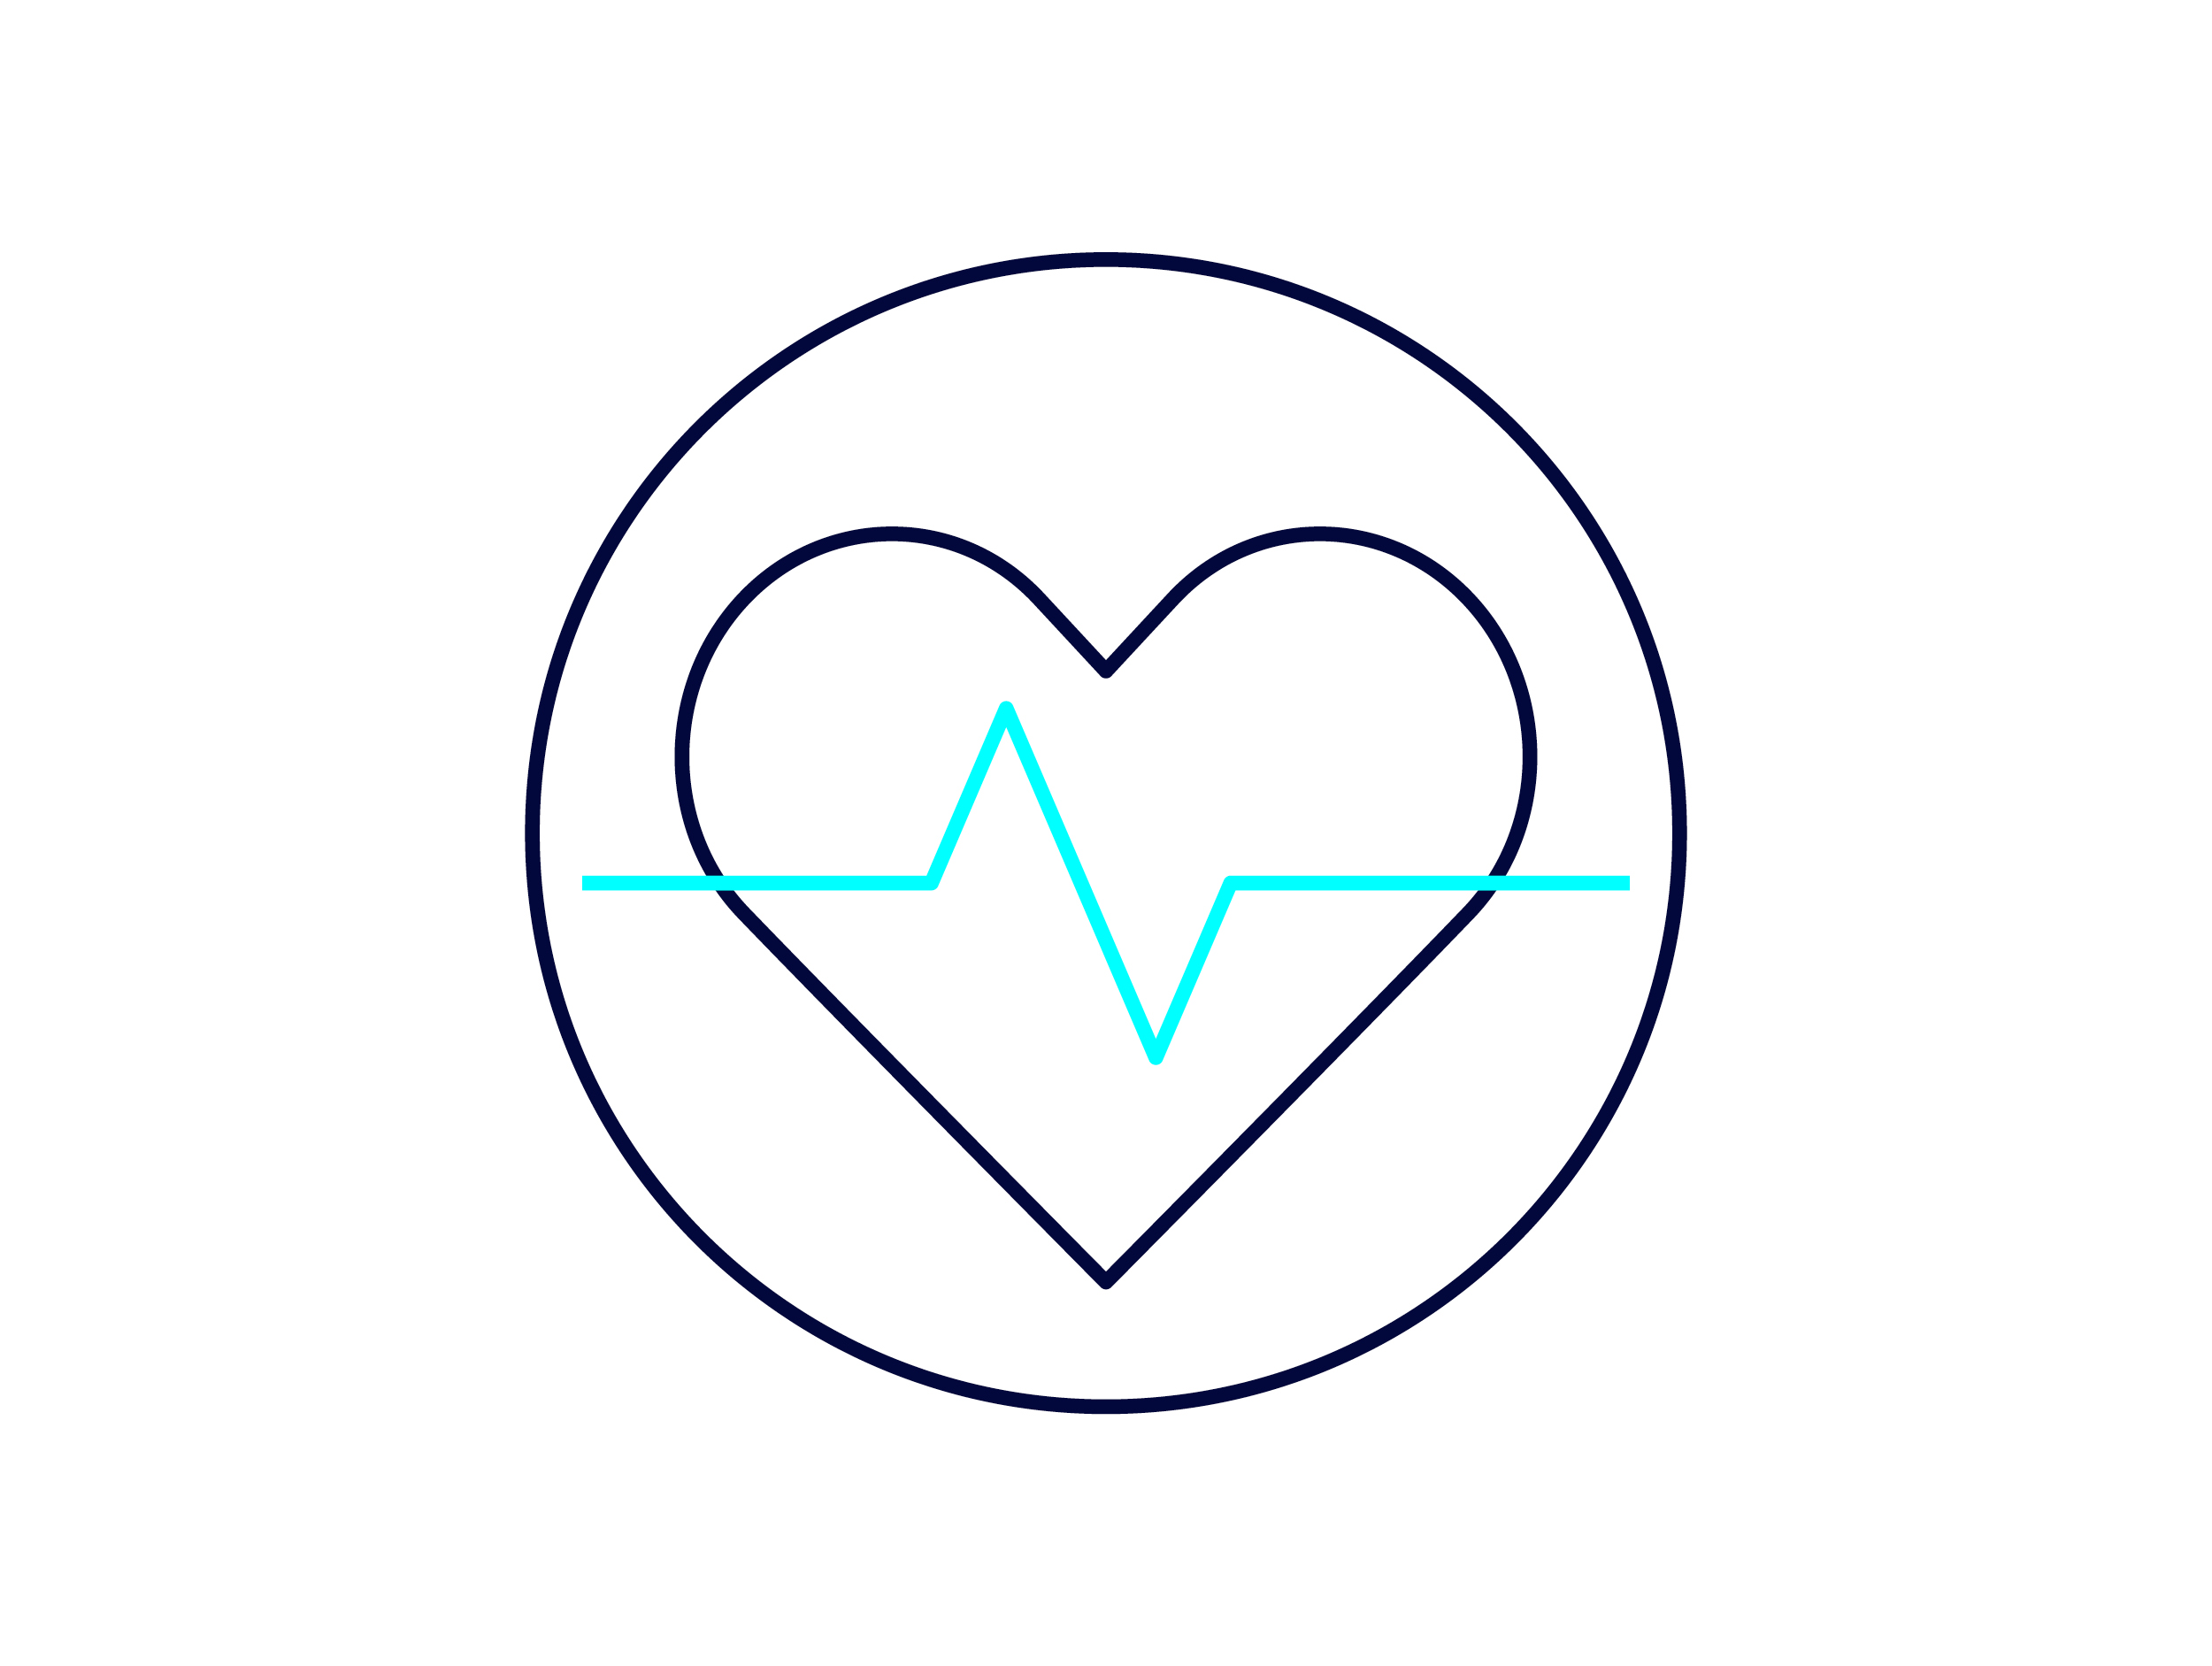 Health assessment - Capita benefit icon